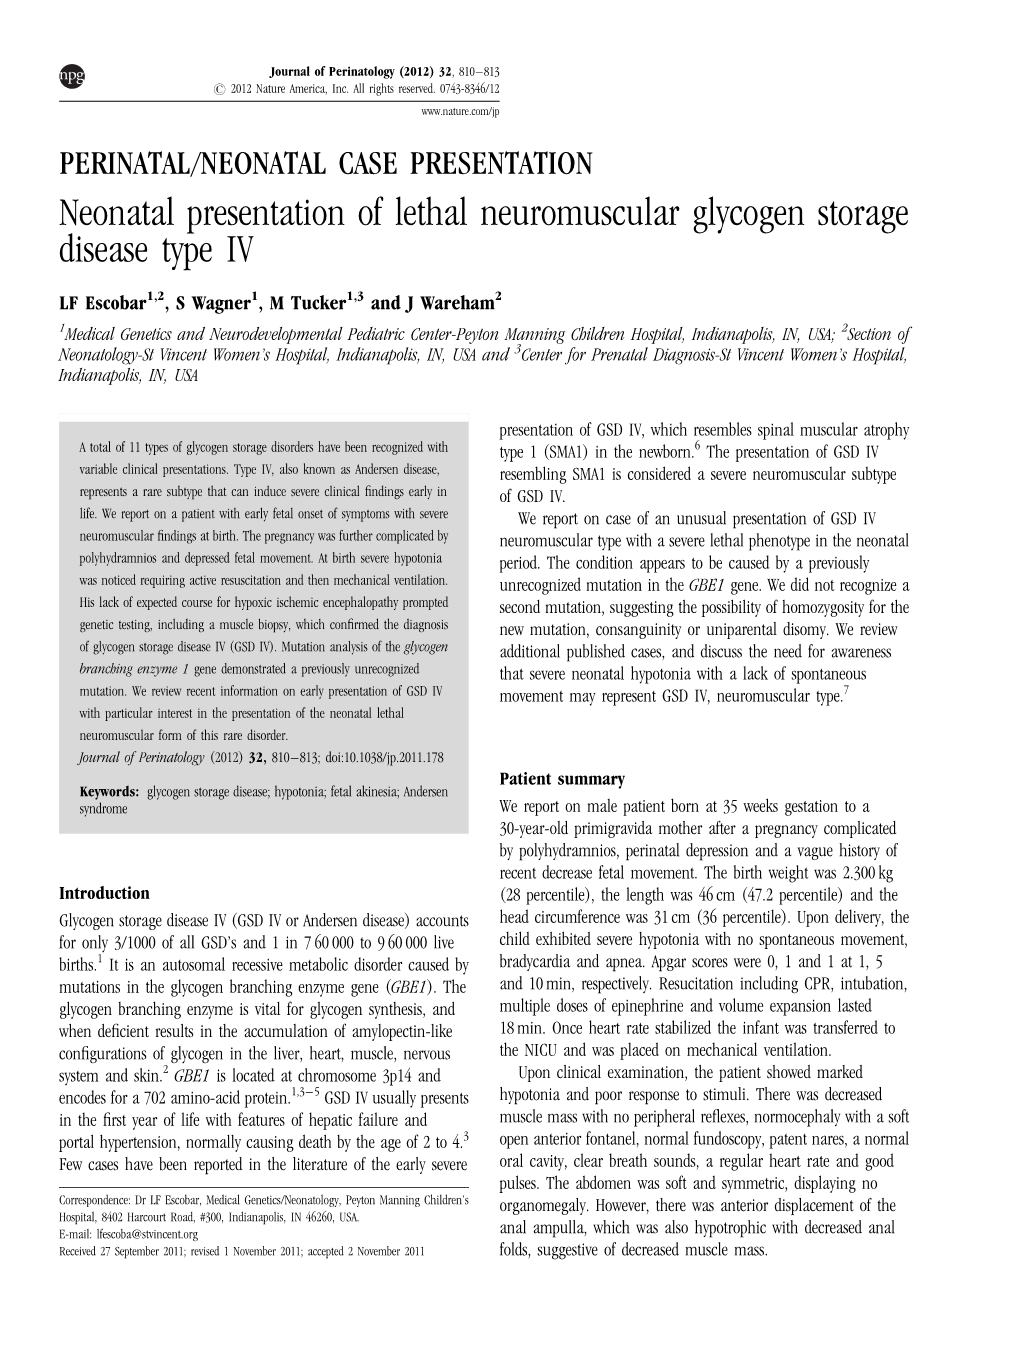 Neonatal Presentation of Lethal Neuromuscular Glycogen Storage Disease Type IV